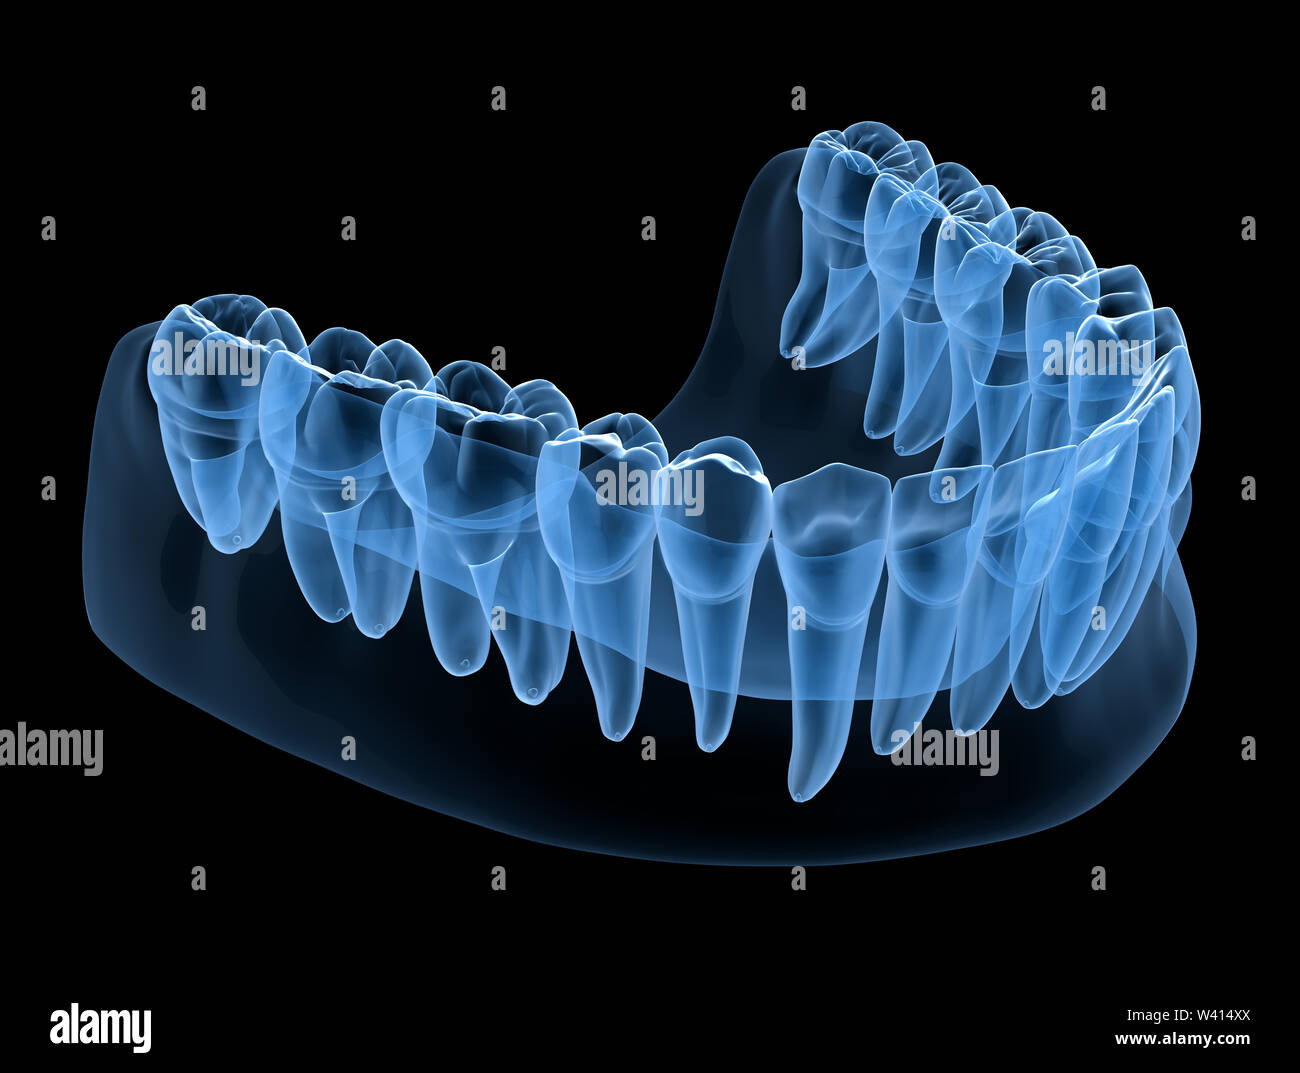 Dental Anatomy Of Mandibular Human Gum And Teeth X Ray View Medically Accurate Tooth 3d